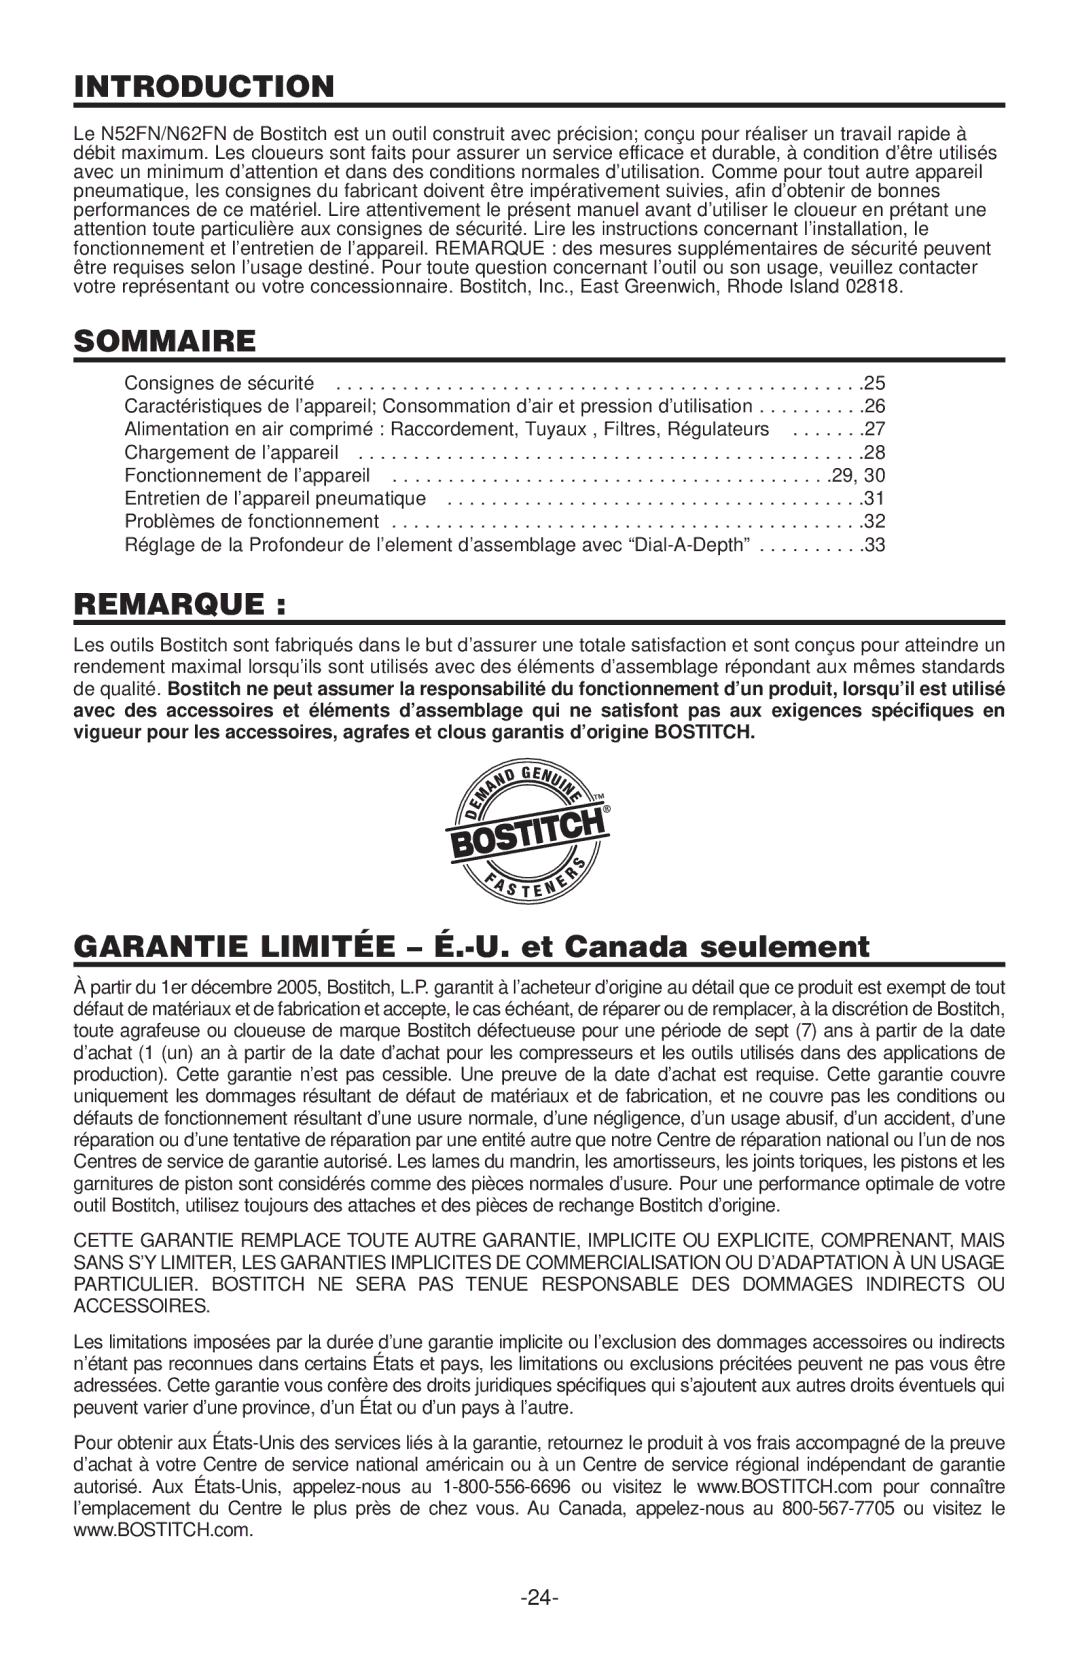 Quantaray N62FN, N52FN manual Sommaire, Remarque 